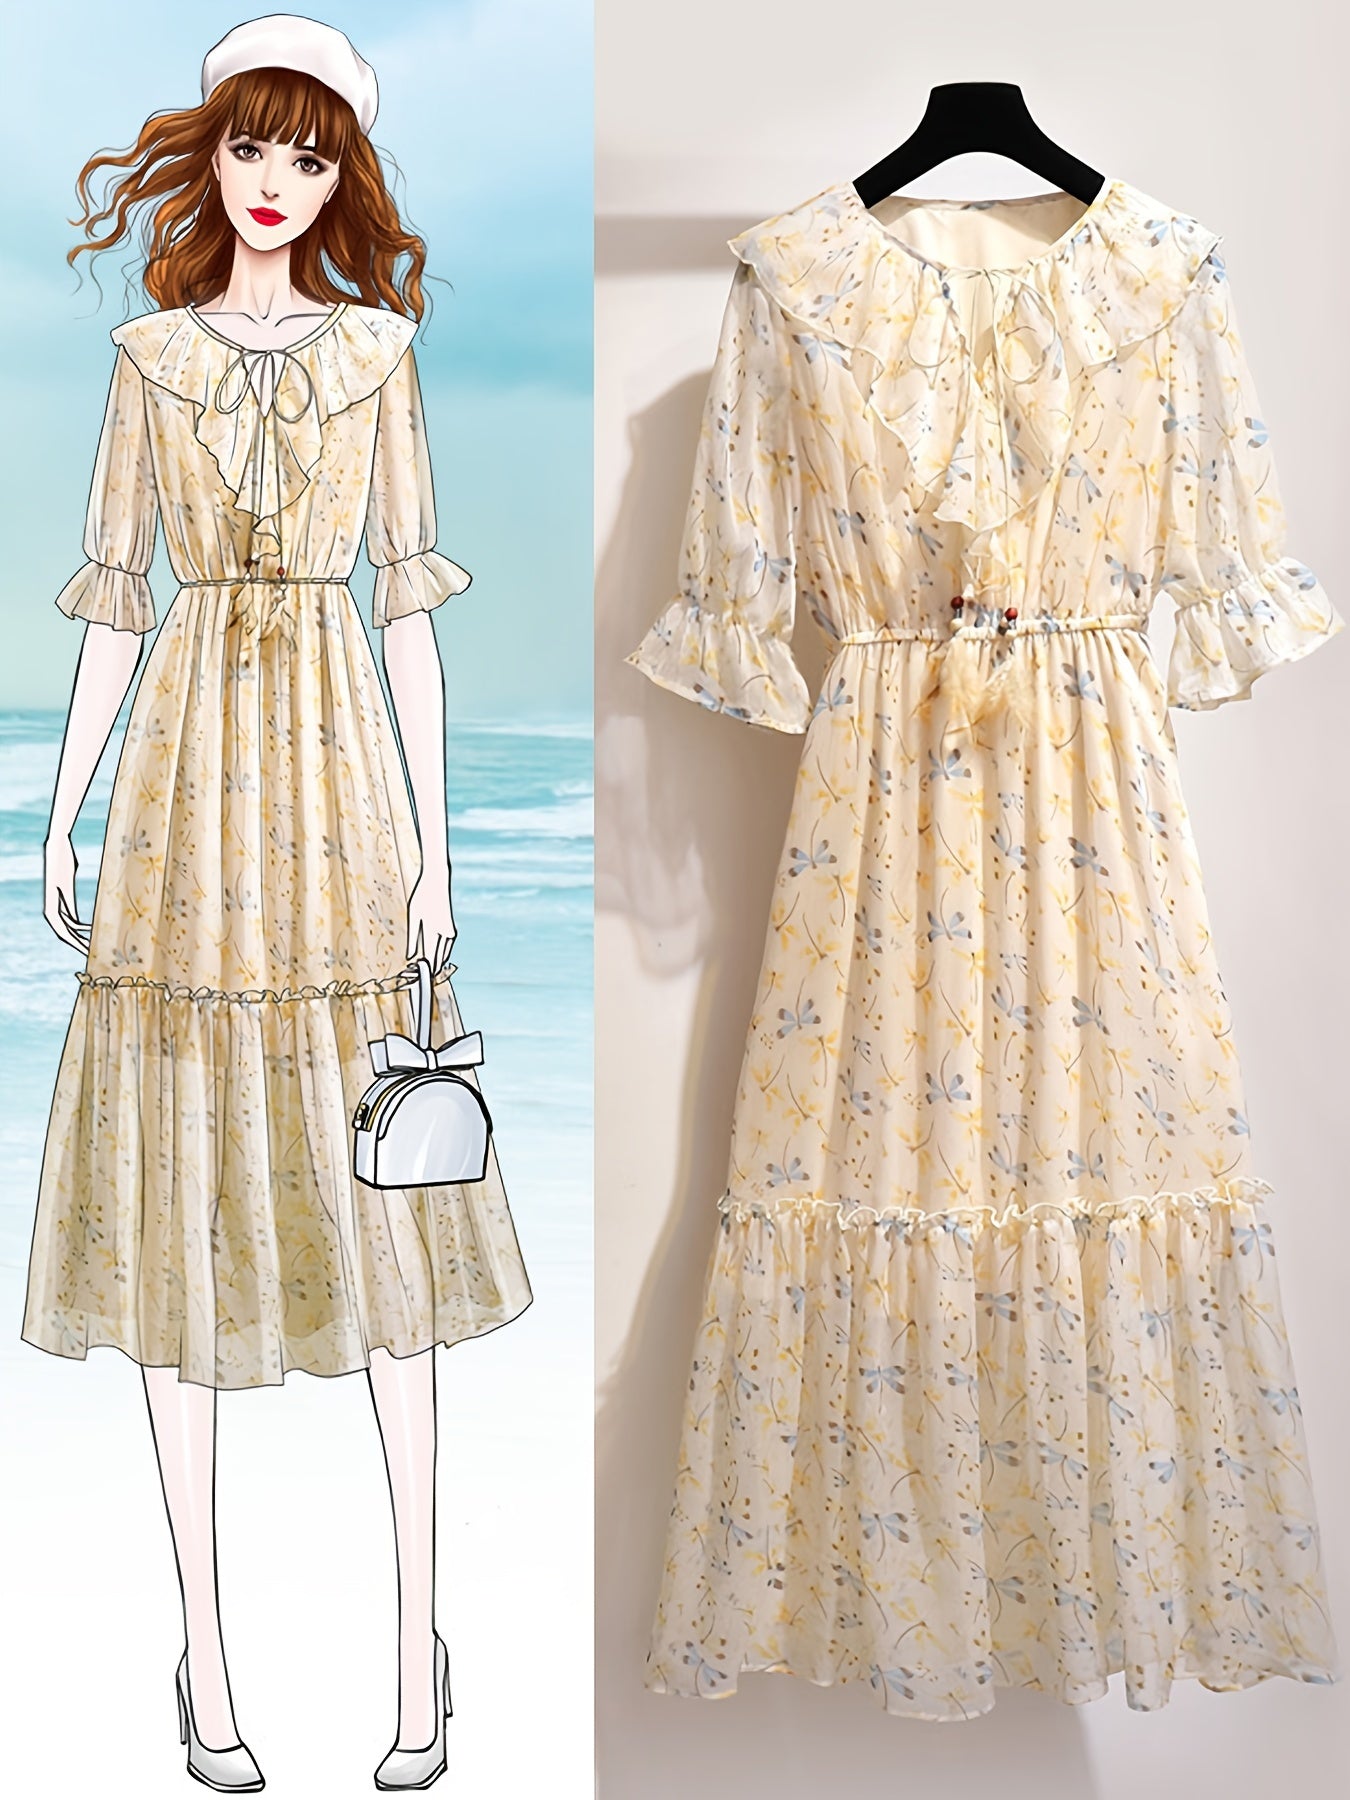 vlovelaw Floral Print Drawstring Dress, Vacation Ruffle Trim High Waist Pleated Maxi Dress, Women's Clothing